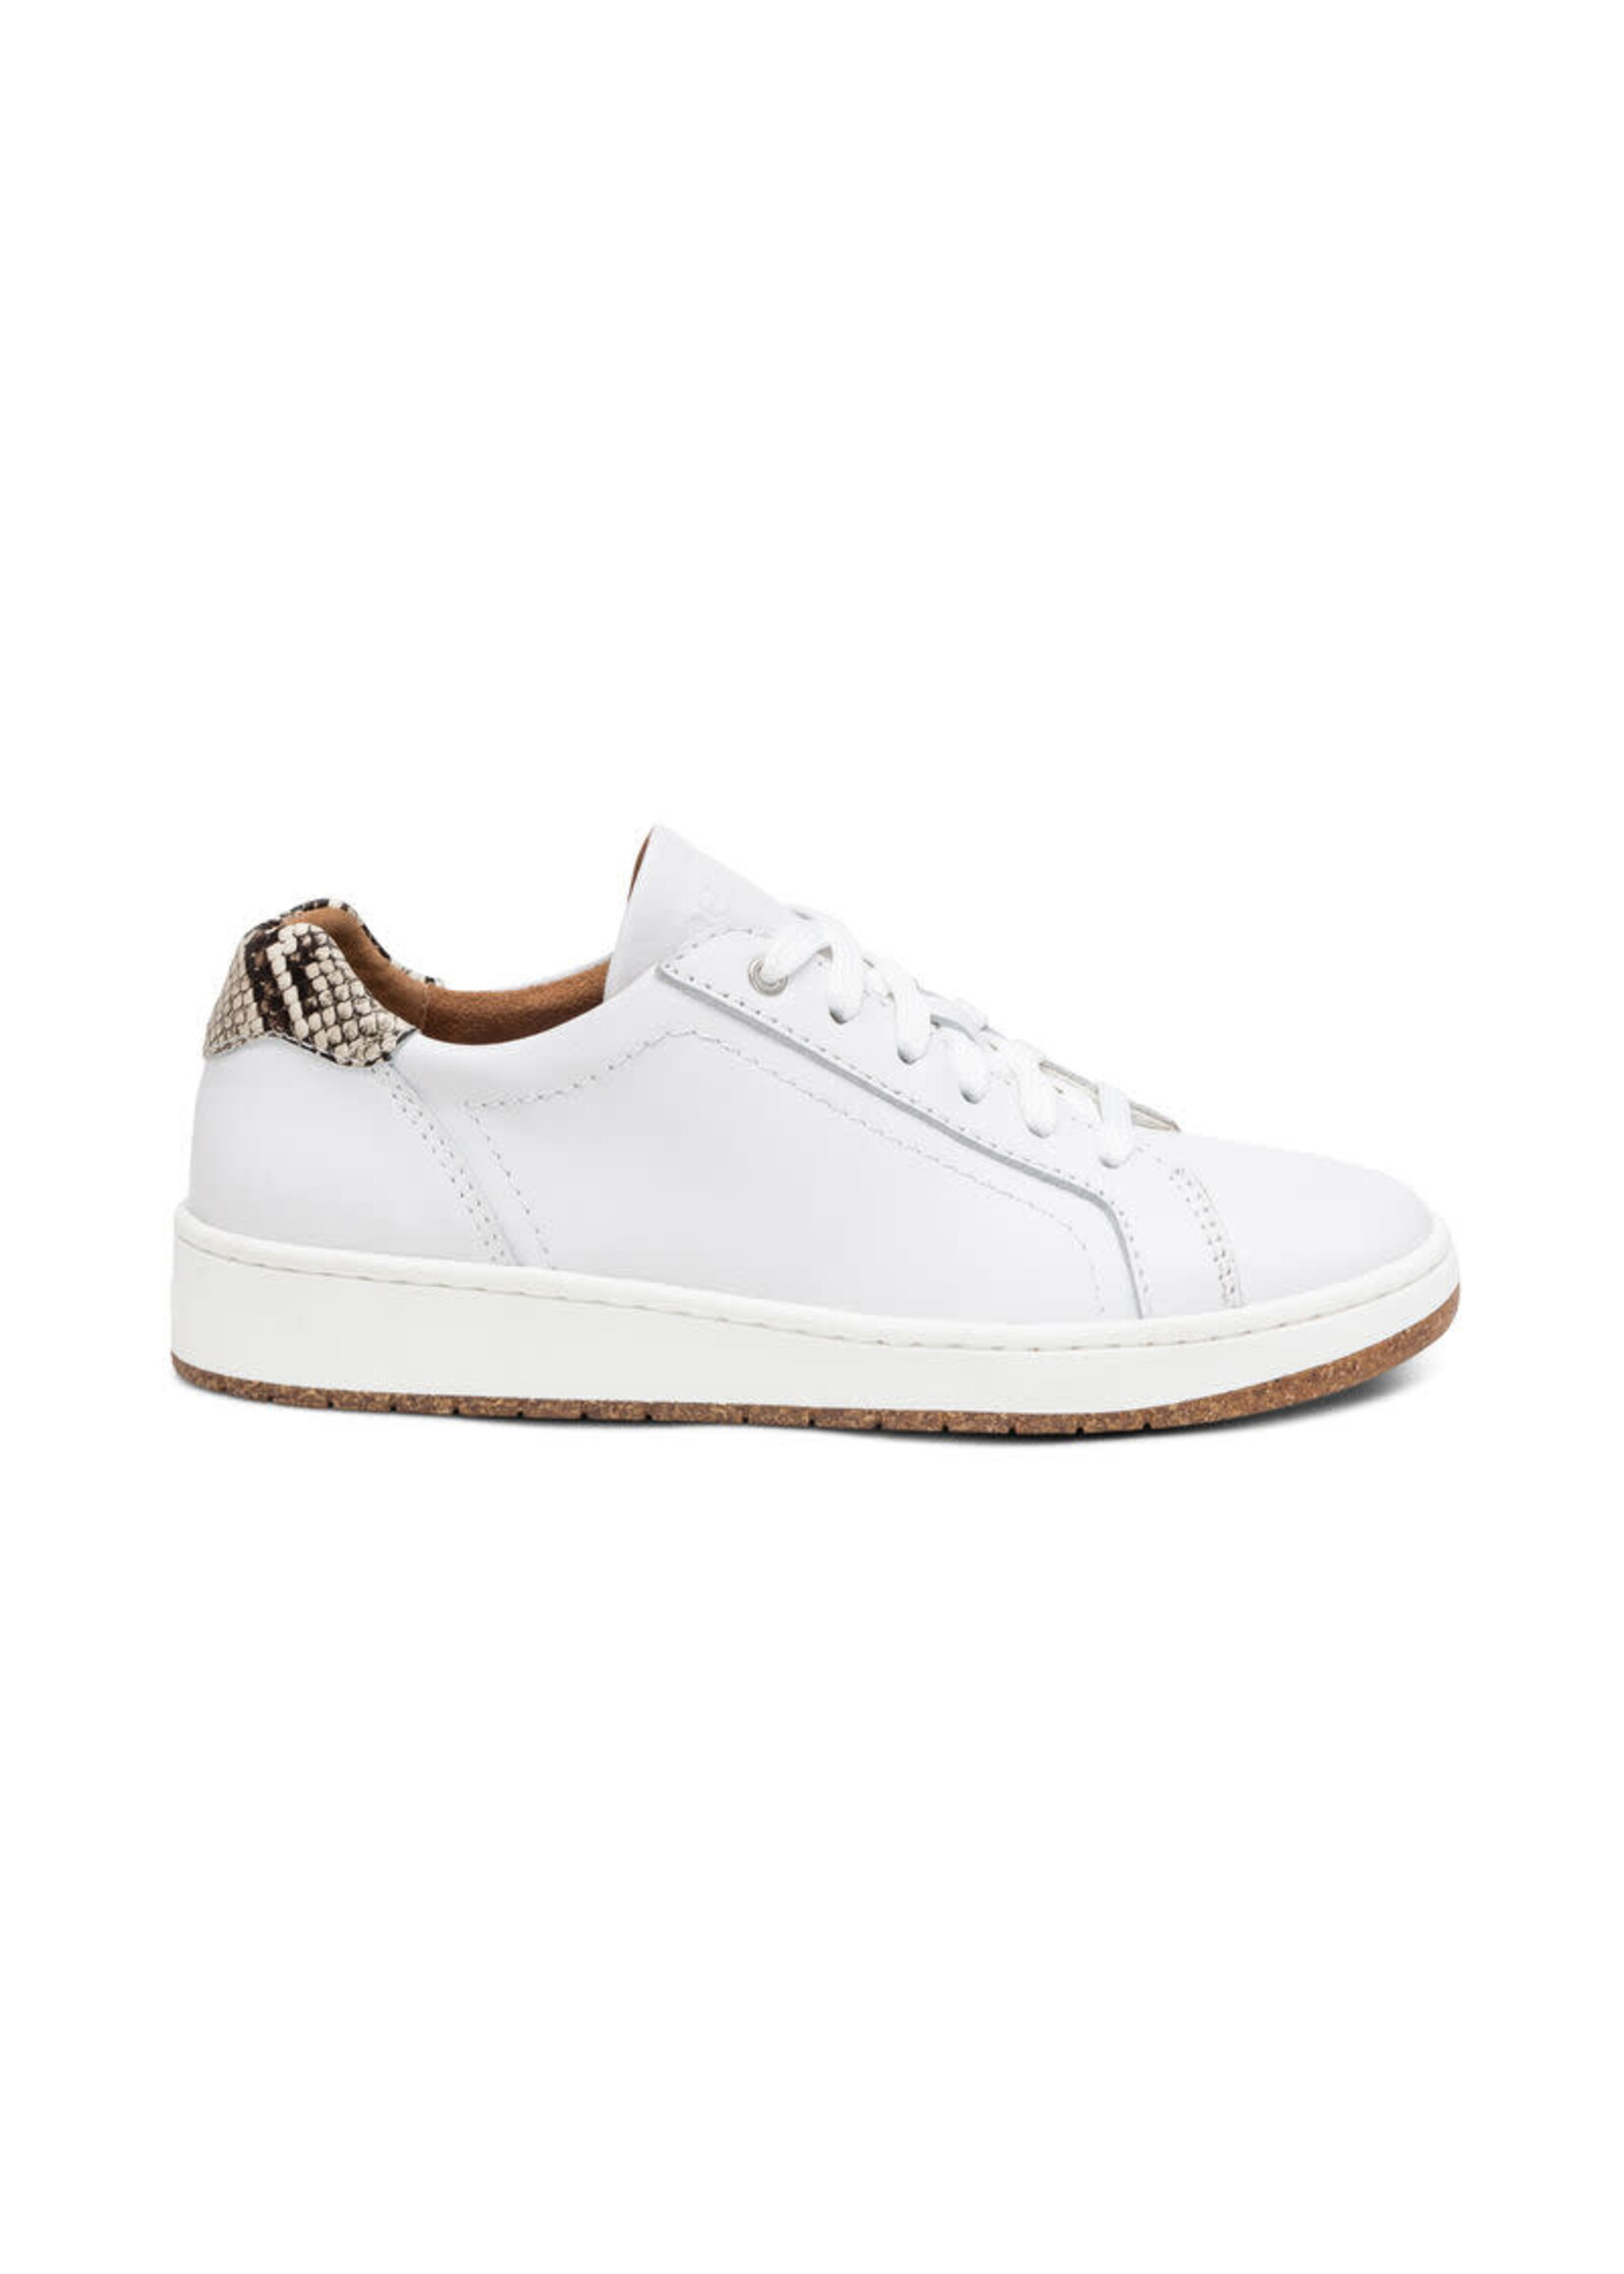 Aetrex Blake White Leather Sneaker by Aetrex   35 & 36 Only    99.99 Blowout